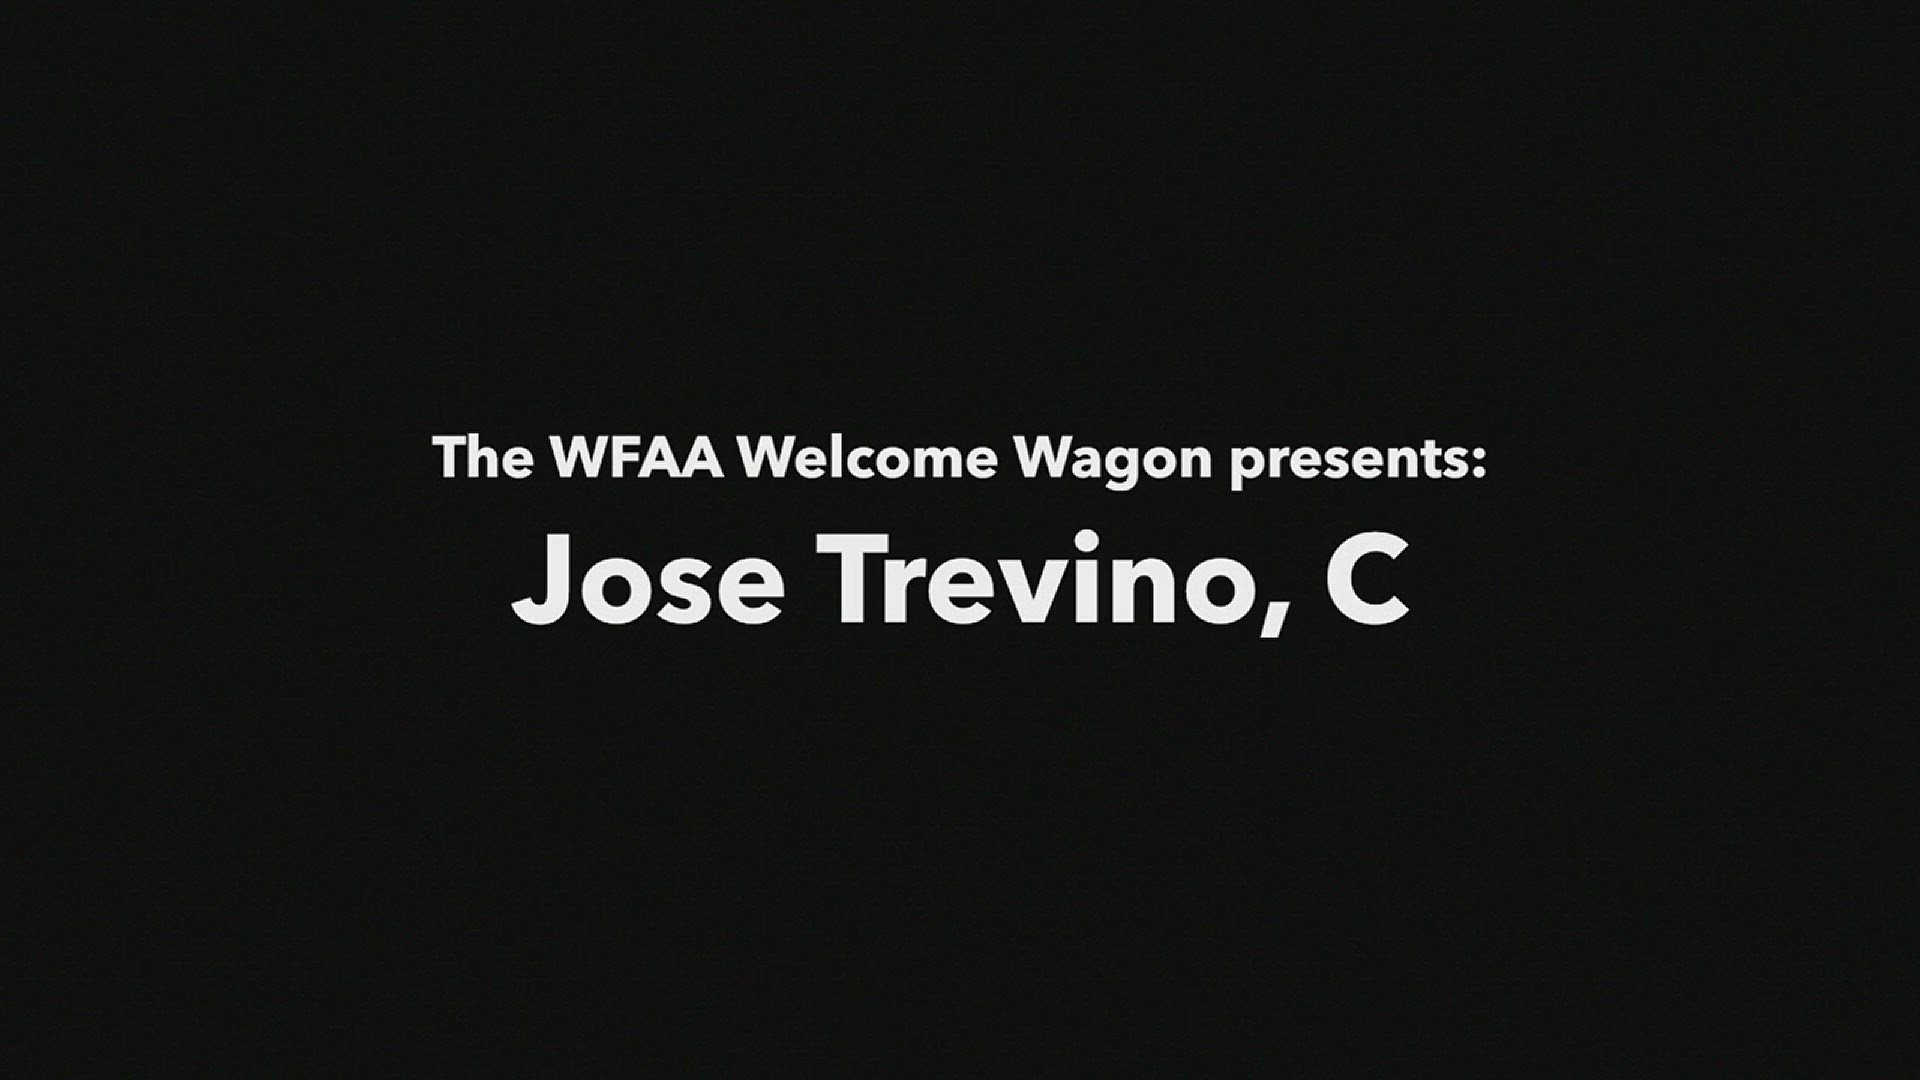 The WFAA Welcome Wagon presents: Jose Trevino